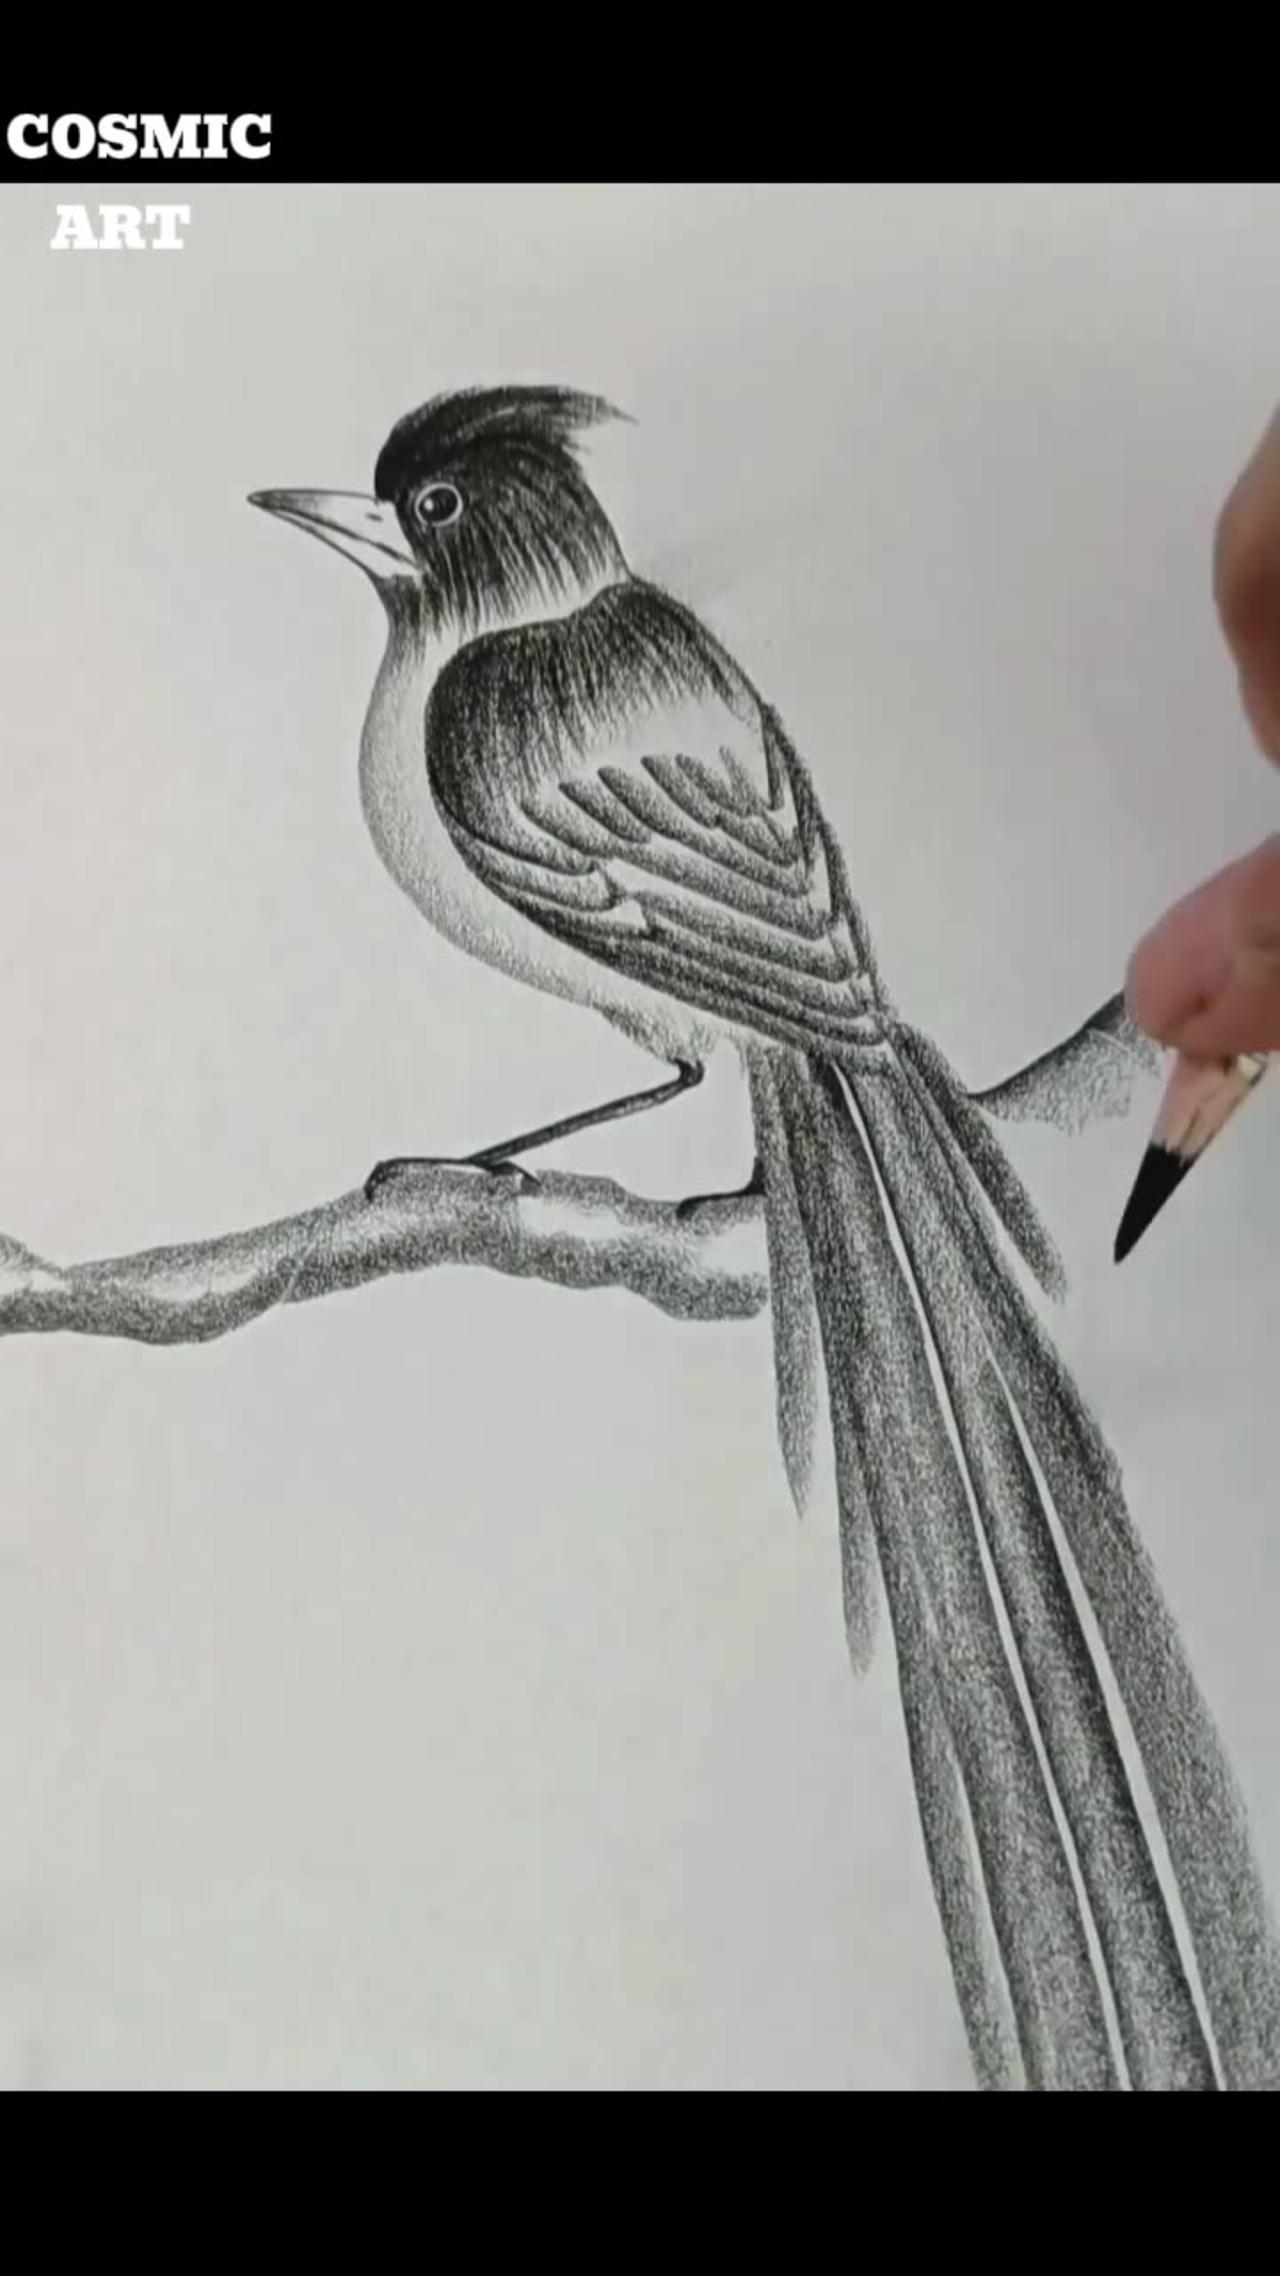 How to art a beautiful bird.